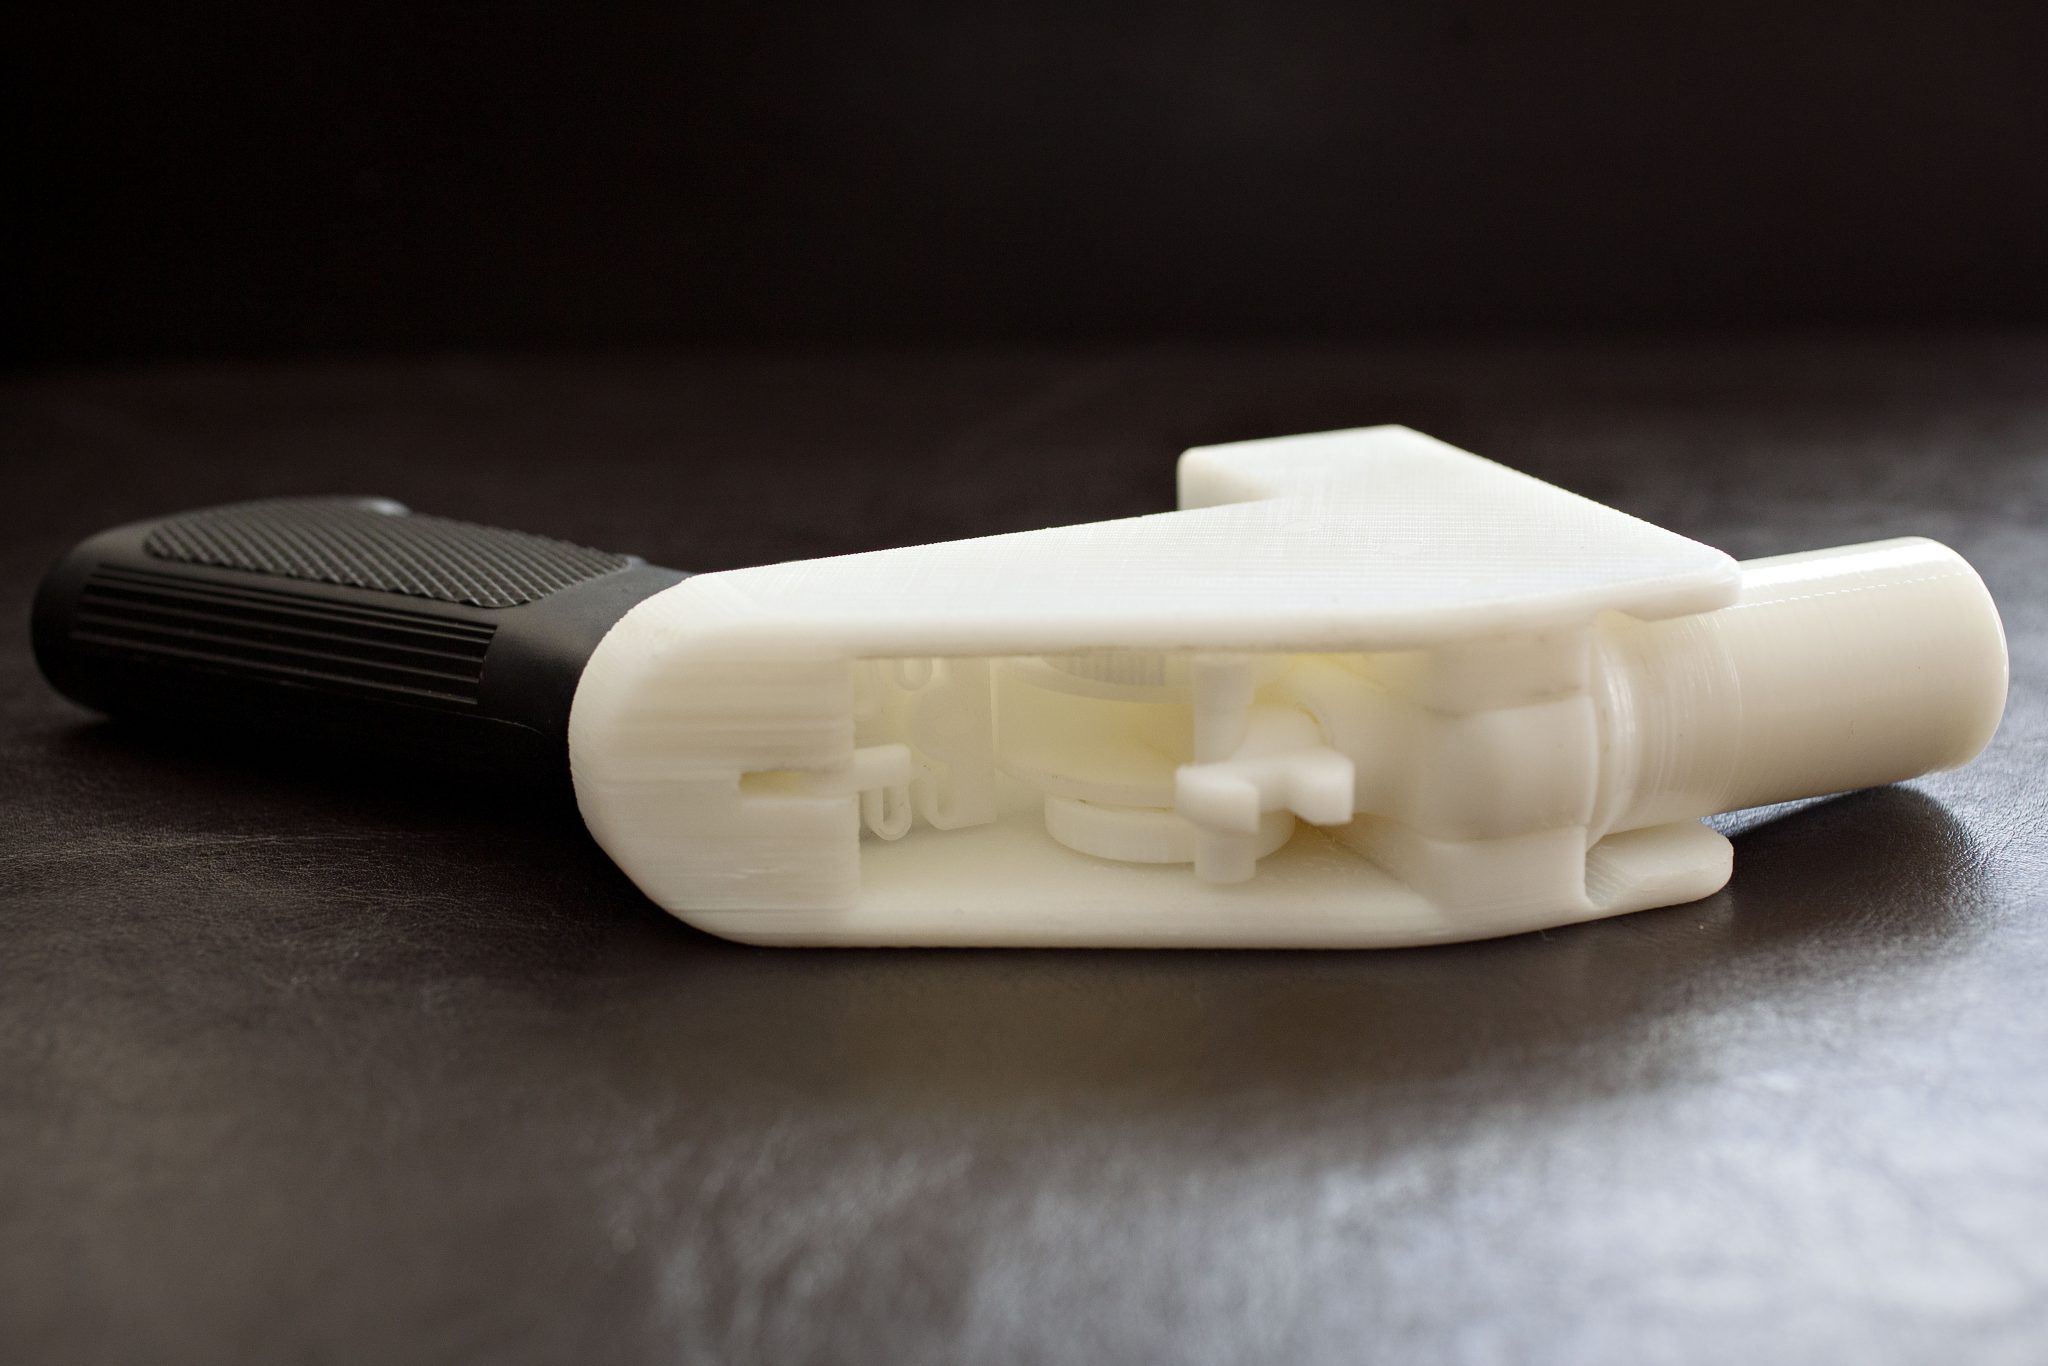 The Plastic Liberator 3D printed gun. Photo by Lorenza Baroncelli